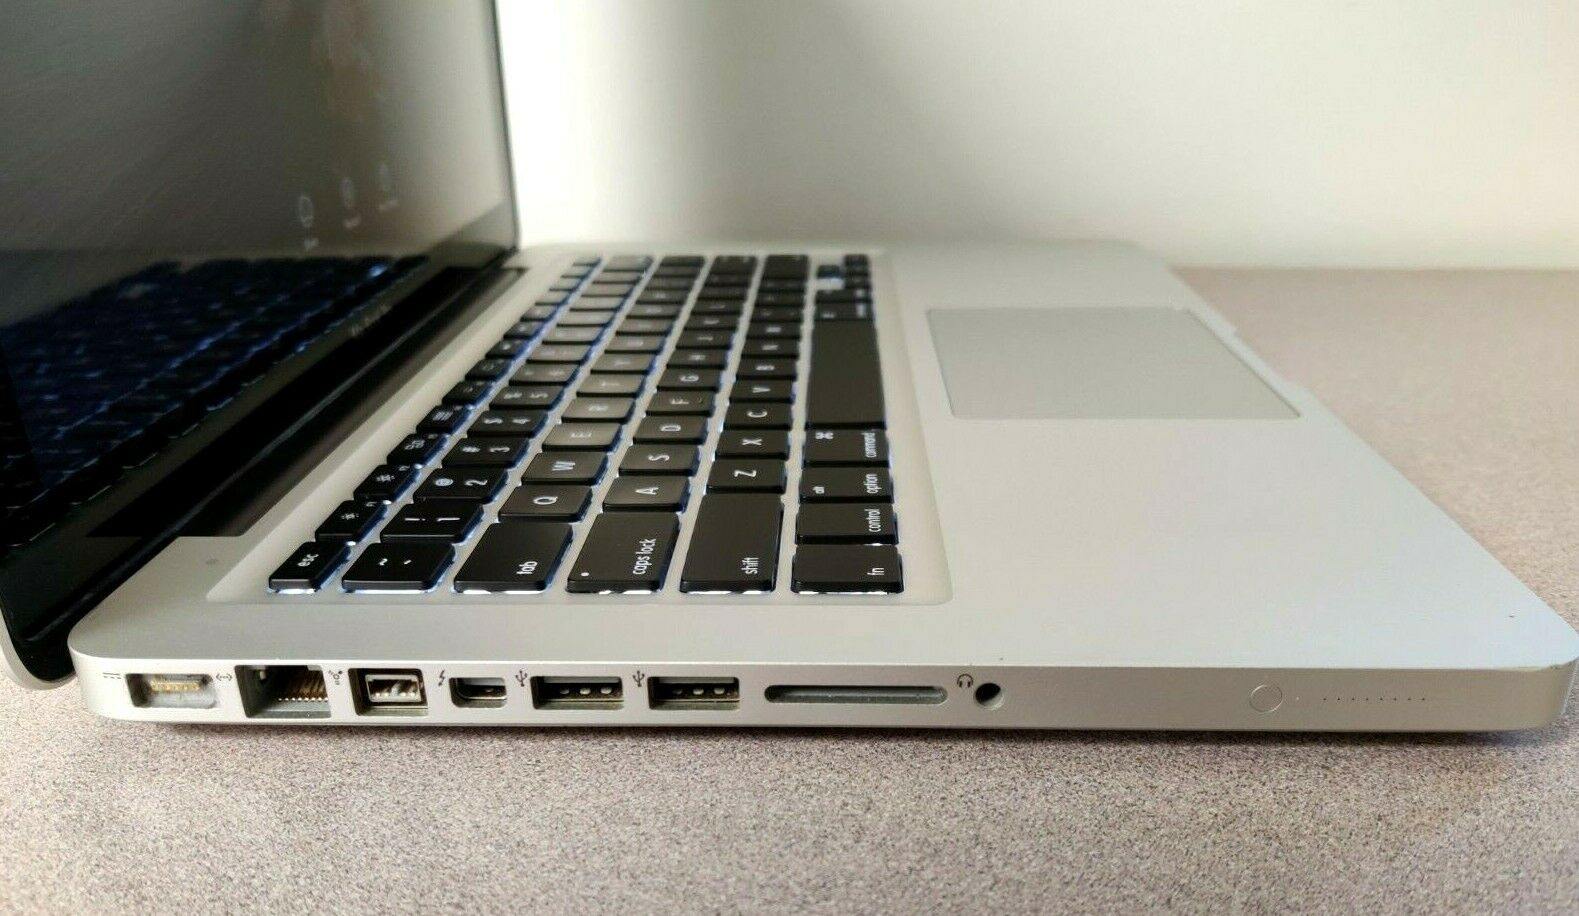 Apple MacBook Pro A1278 13.3" Laptop - MC374LL/A 8gb 500GB or 128SSD  2011 End 2012 - Atlas Computers & Electronics 